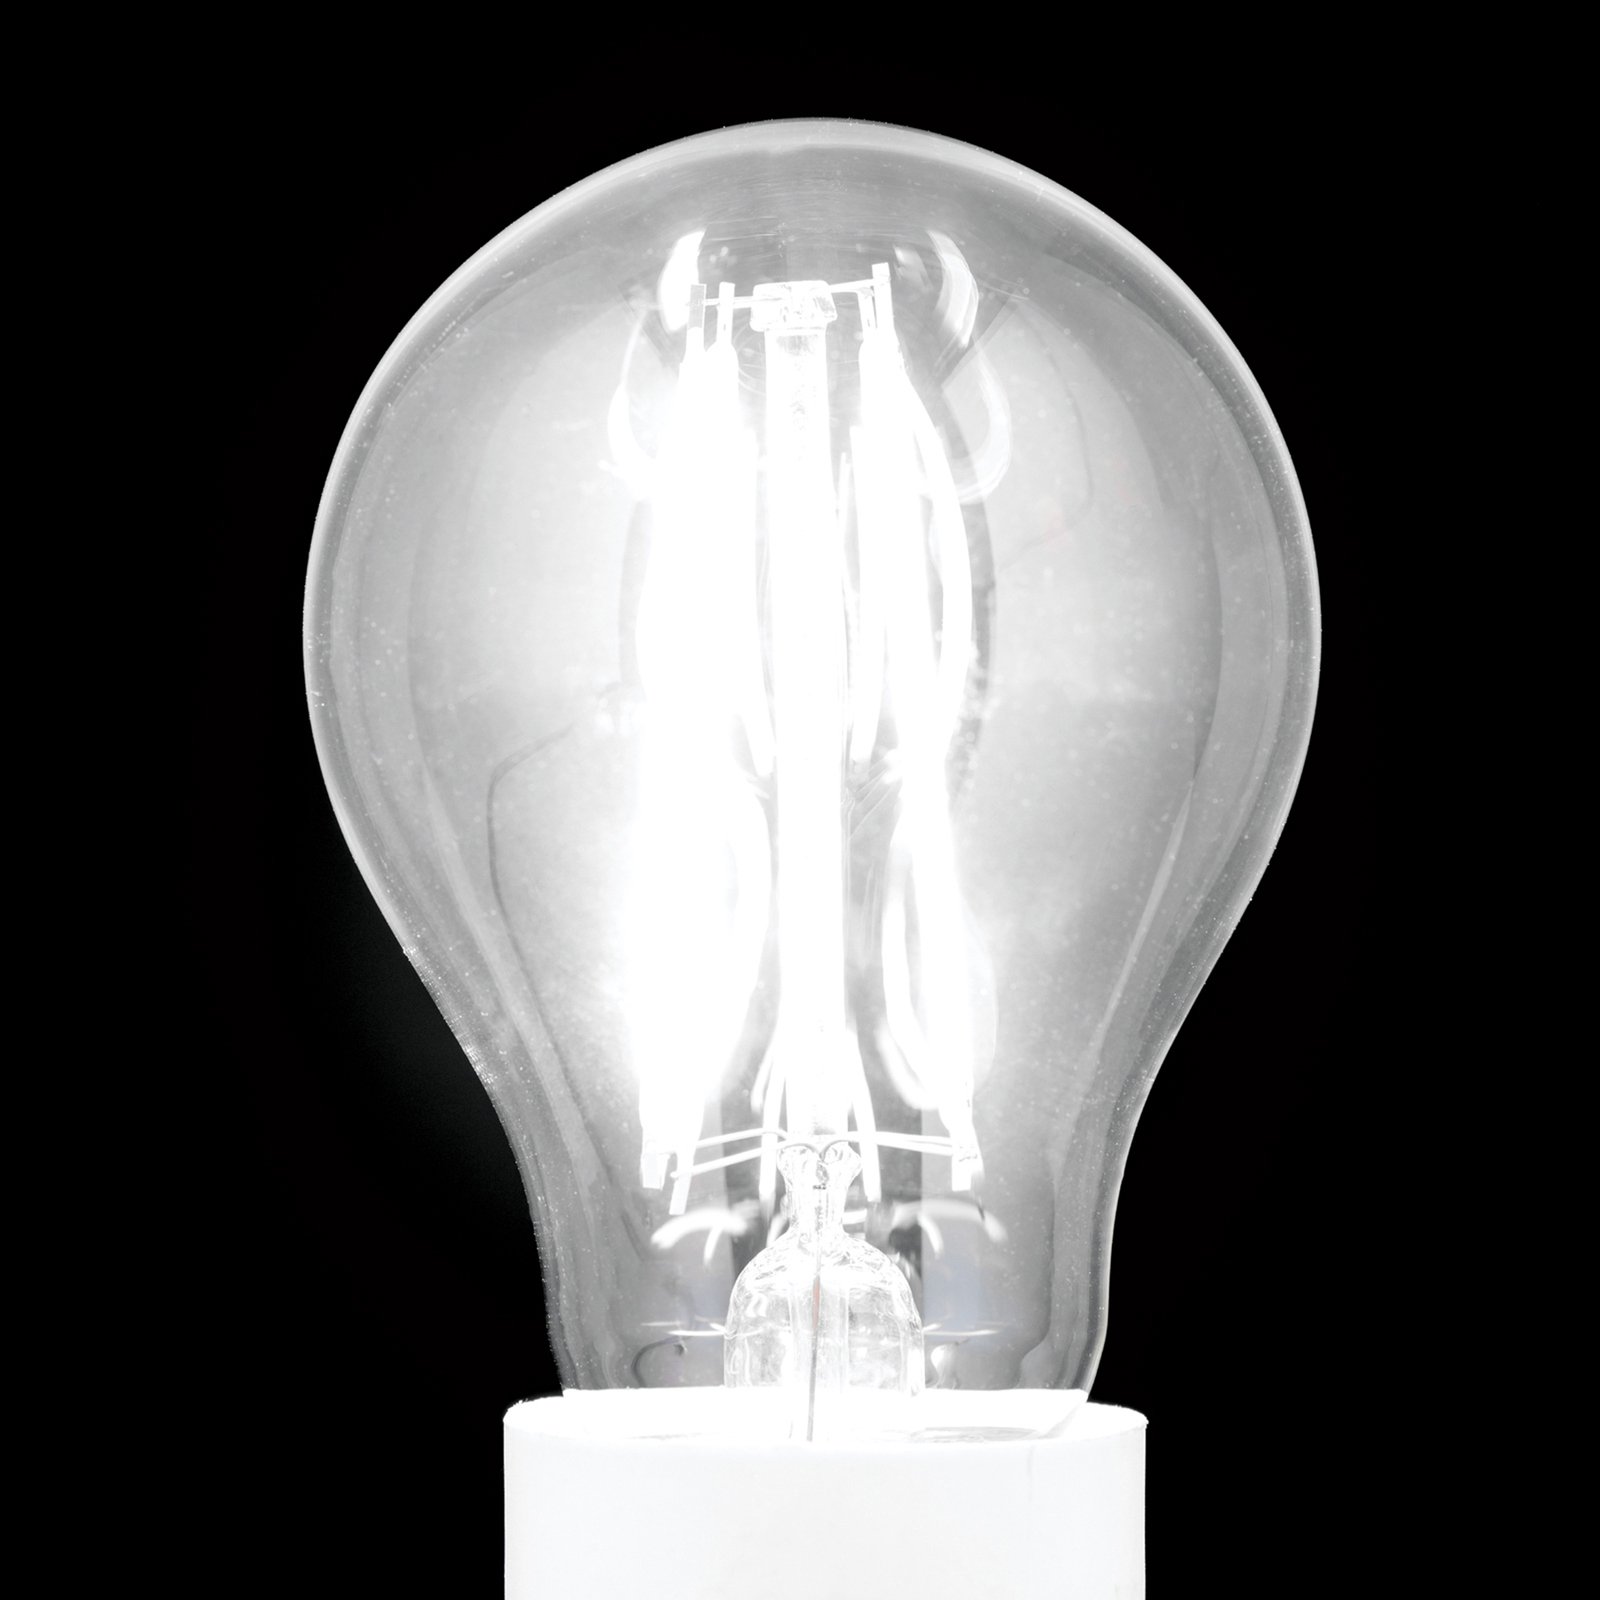 LED-Lampe E27 8W Filament 2.700K 806 lm dimmbar